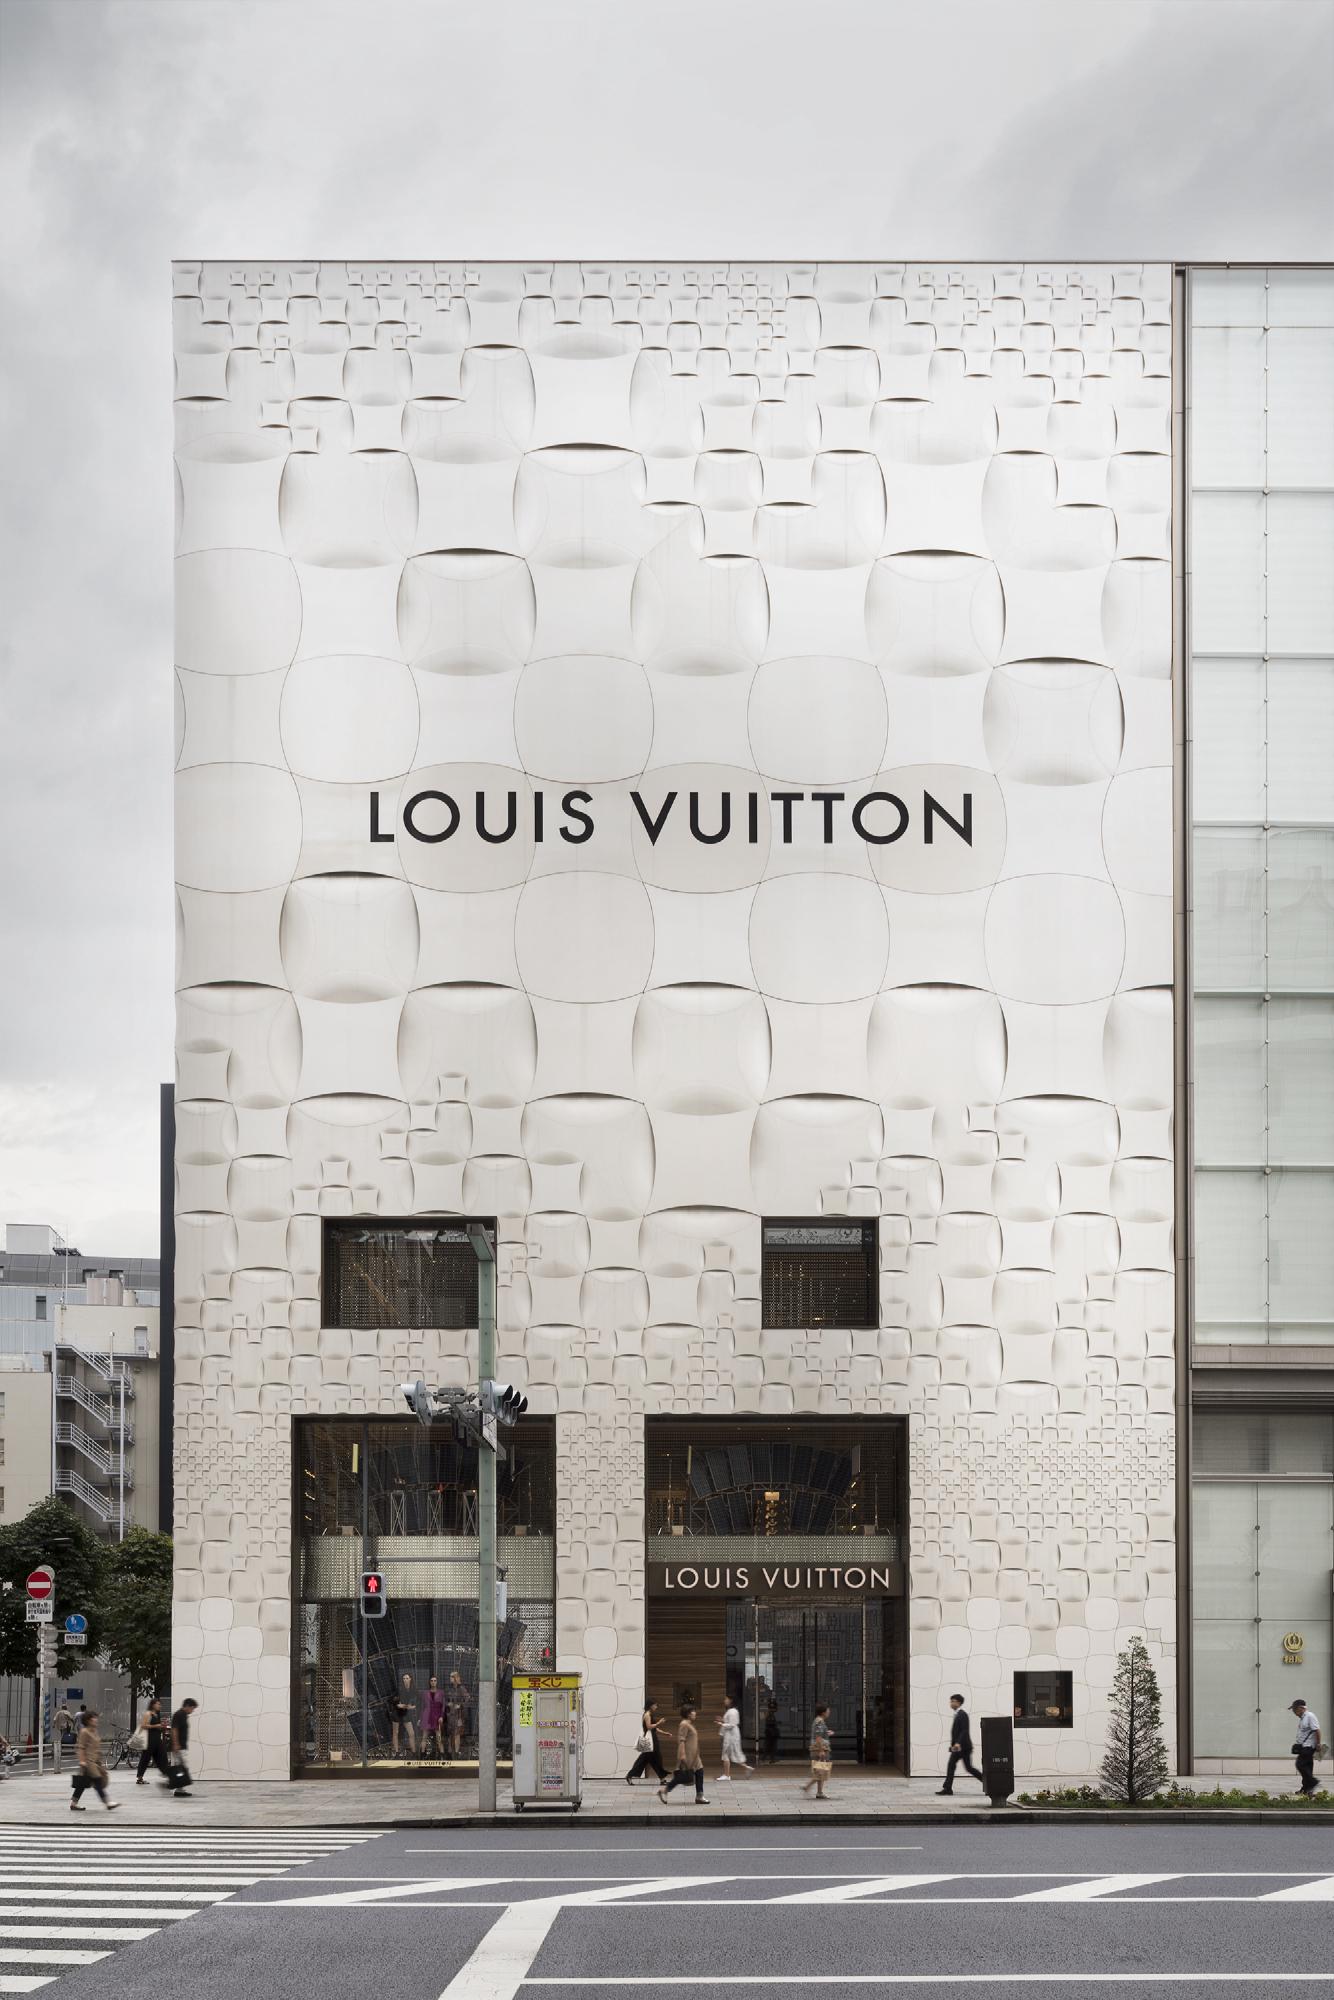 Louis Vuitton Lausanne store, Switzerland